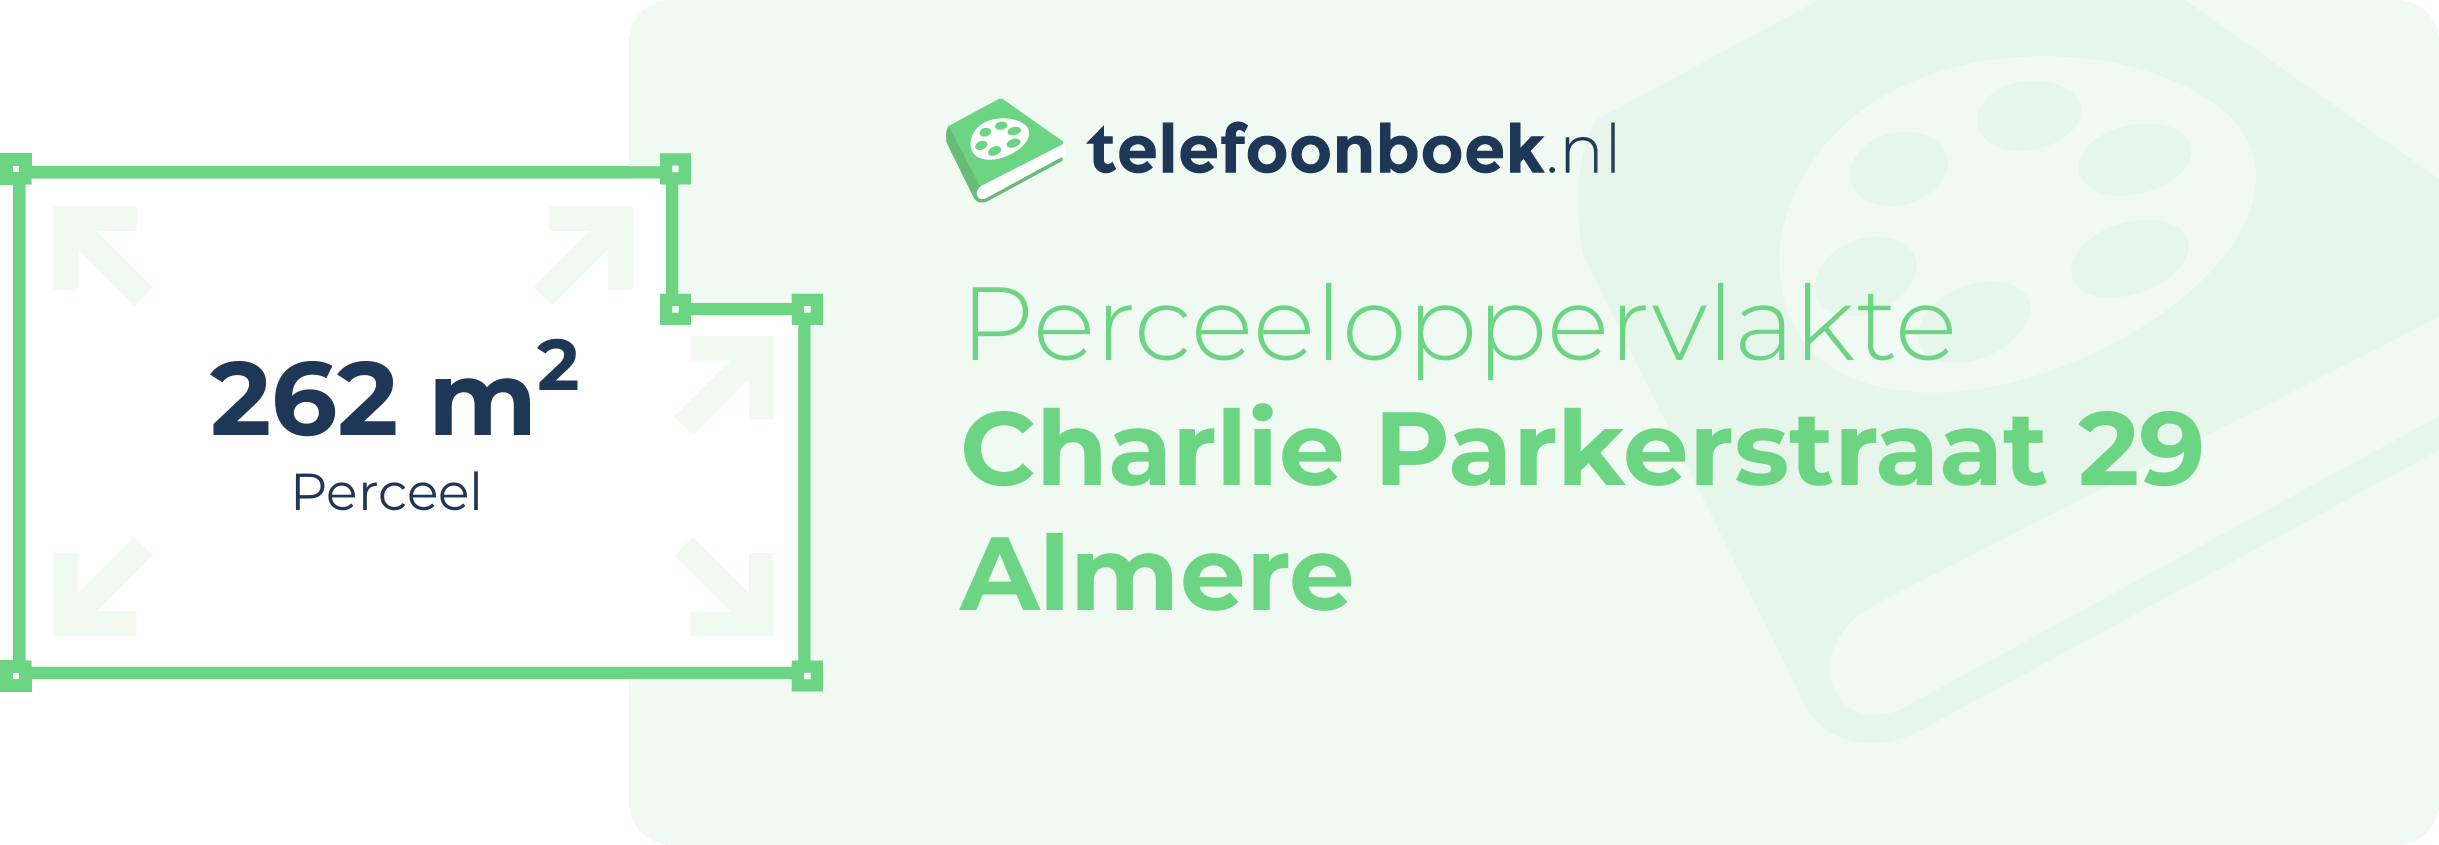 Perceeloppervlakte Charlie Parkerstraat 29 Almere